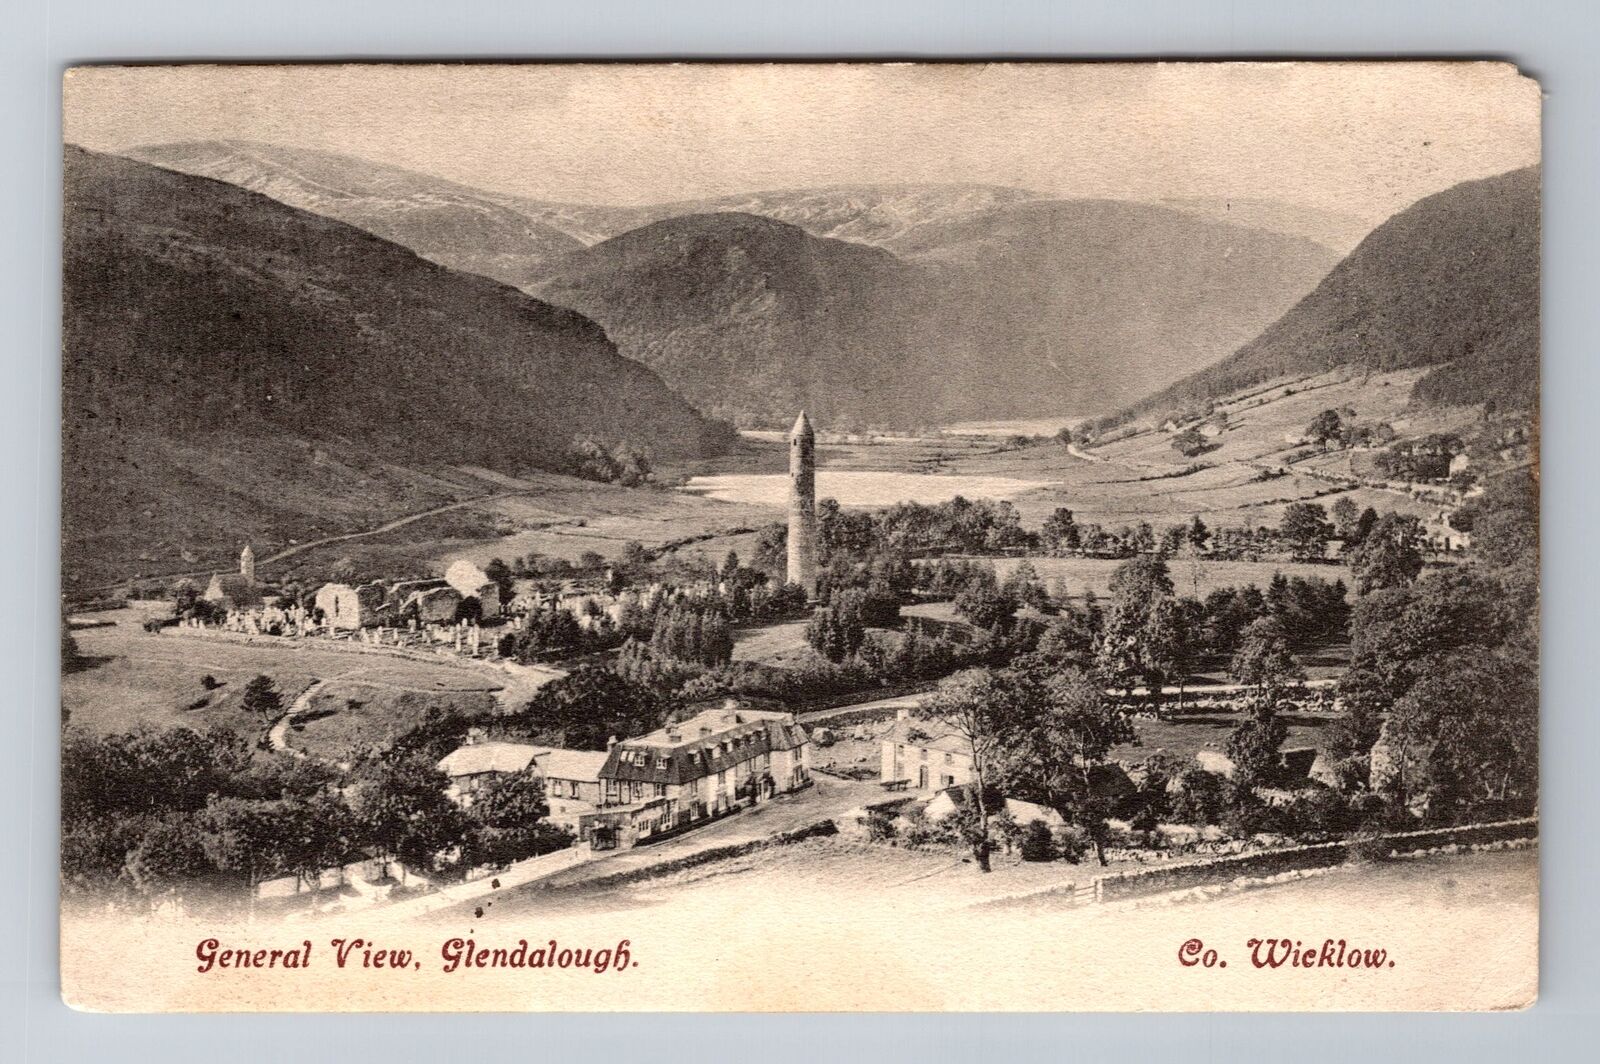 Glendalough-Ireland, General View Glendalough, County Wicklow, Vintage Postcard